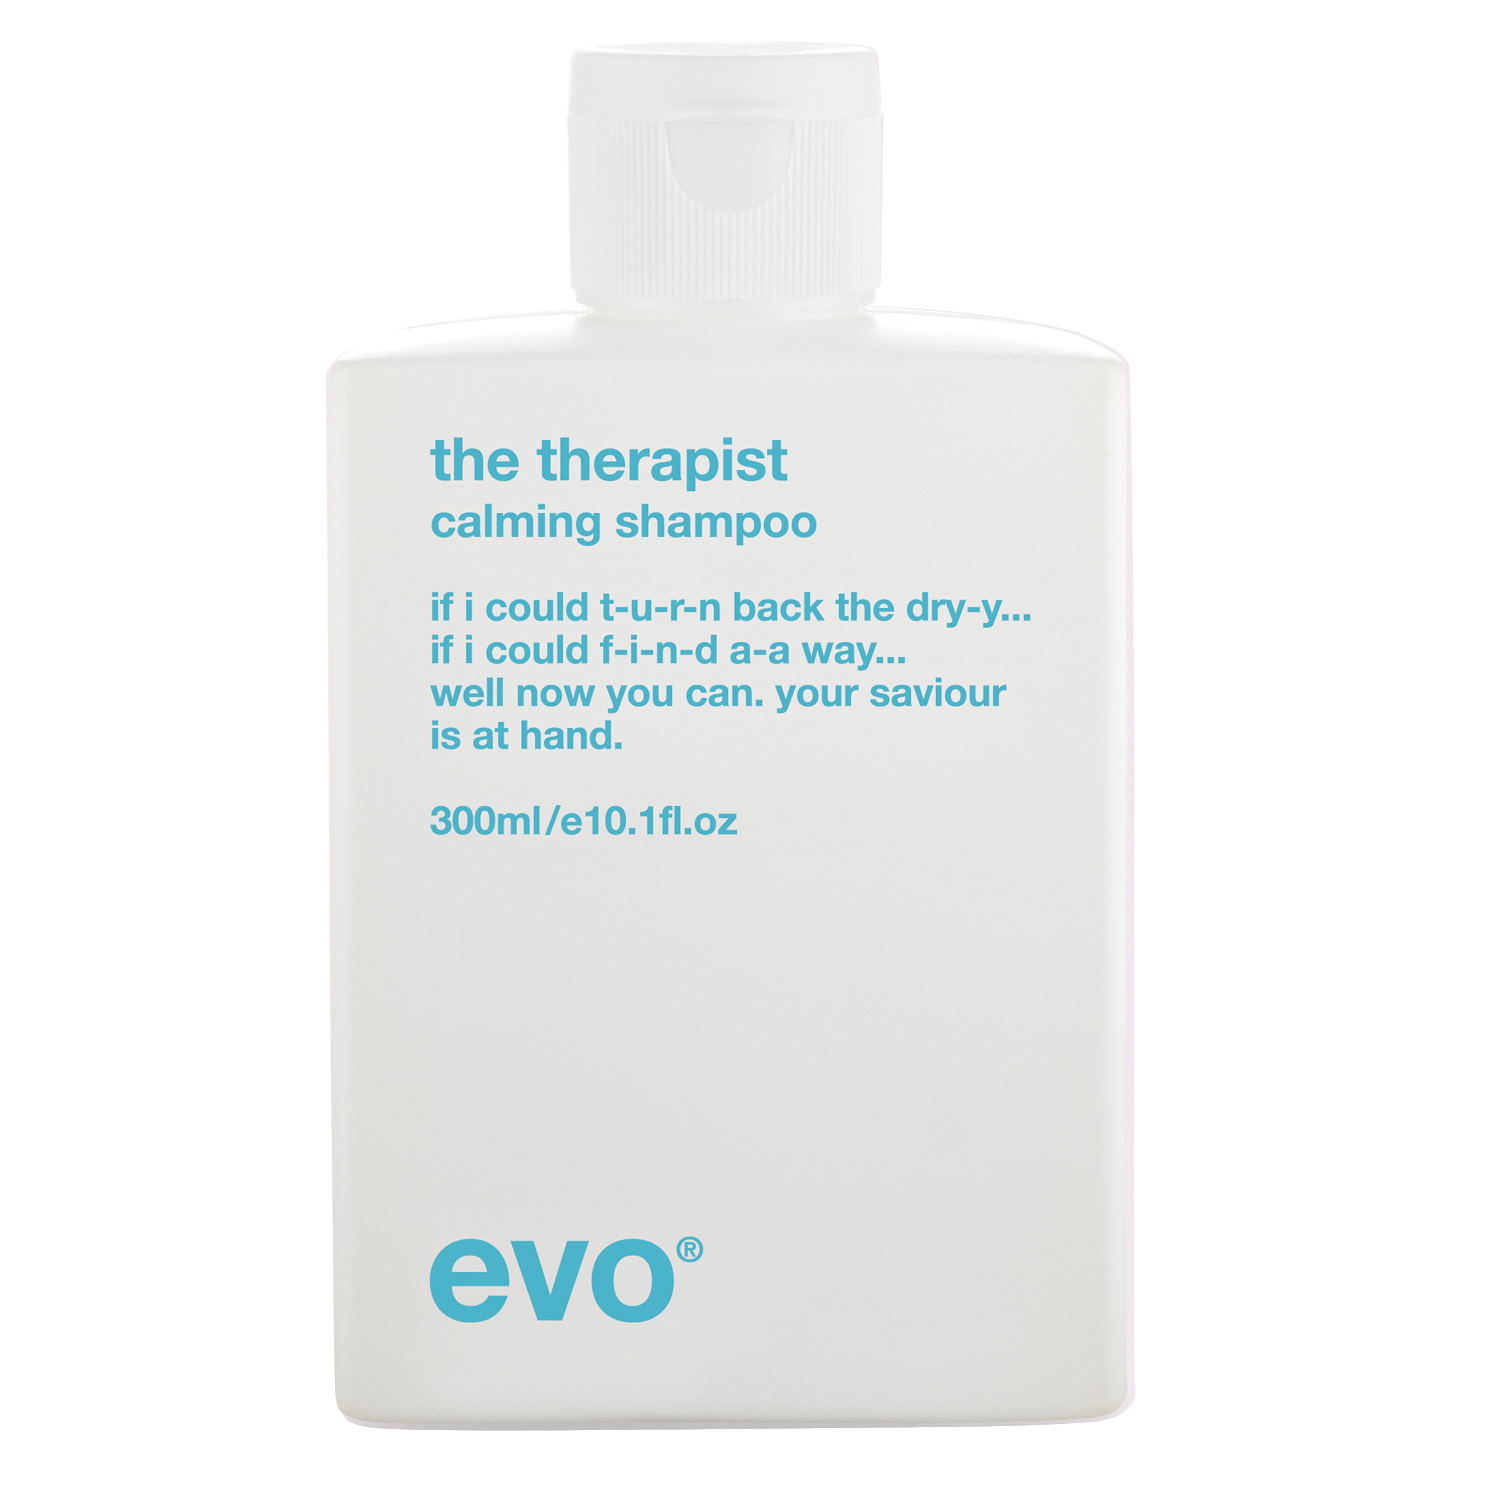 EVO Увлажняющий шампунь [терапевт] Calming Shampoo, 300 мл (EVO, the therapist) цена и фото